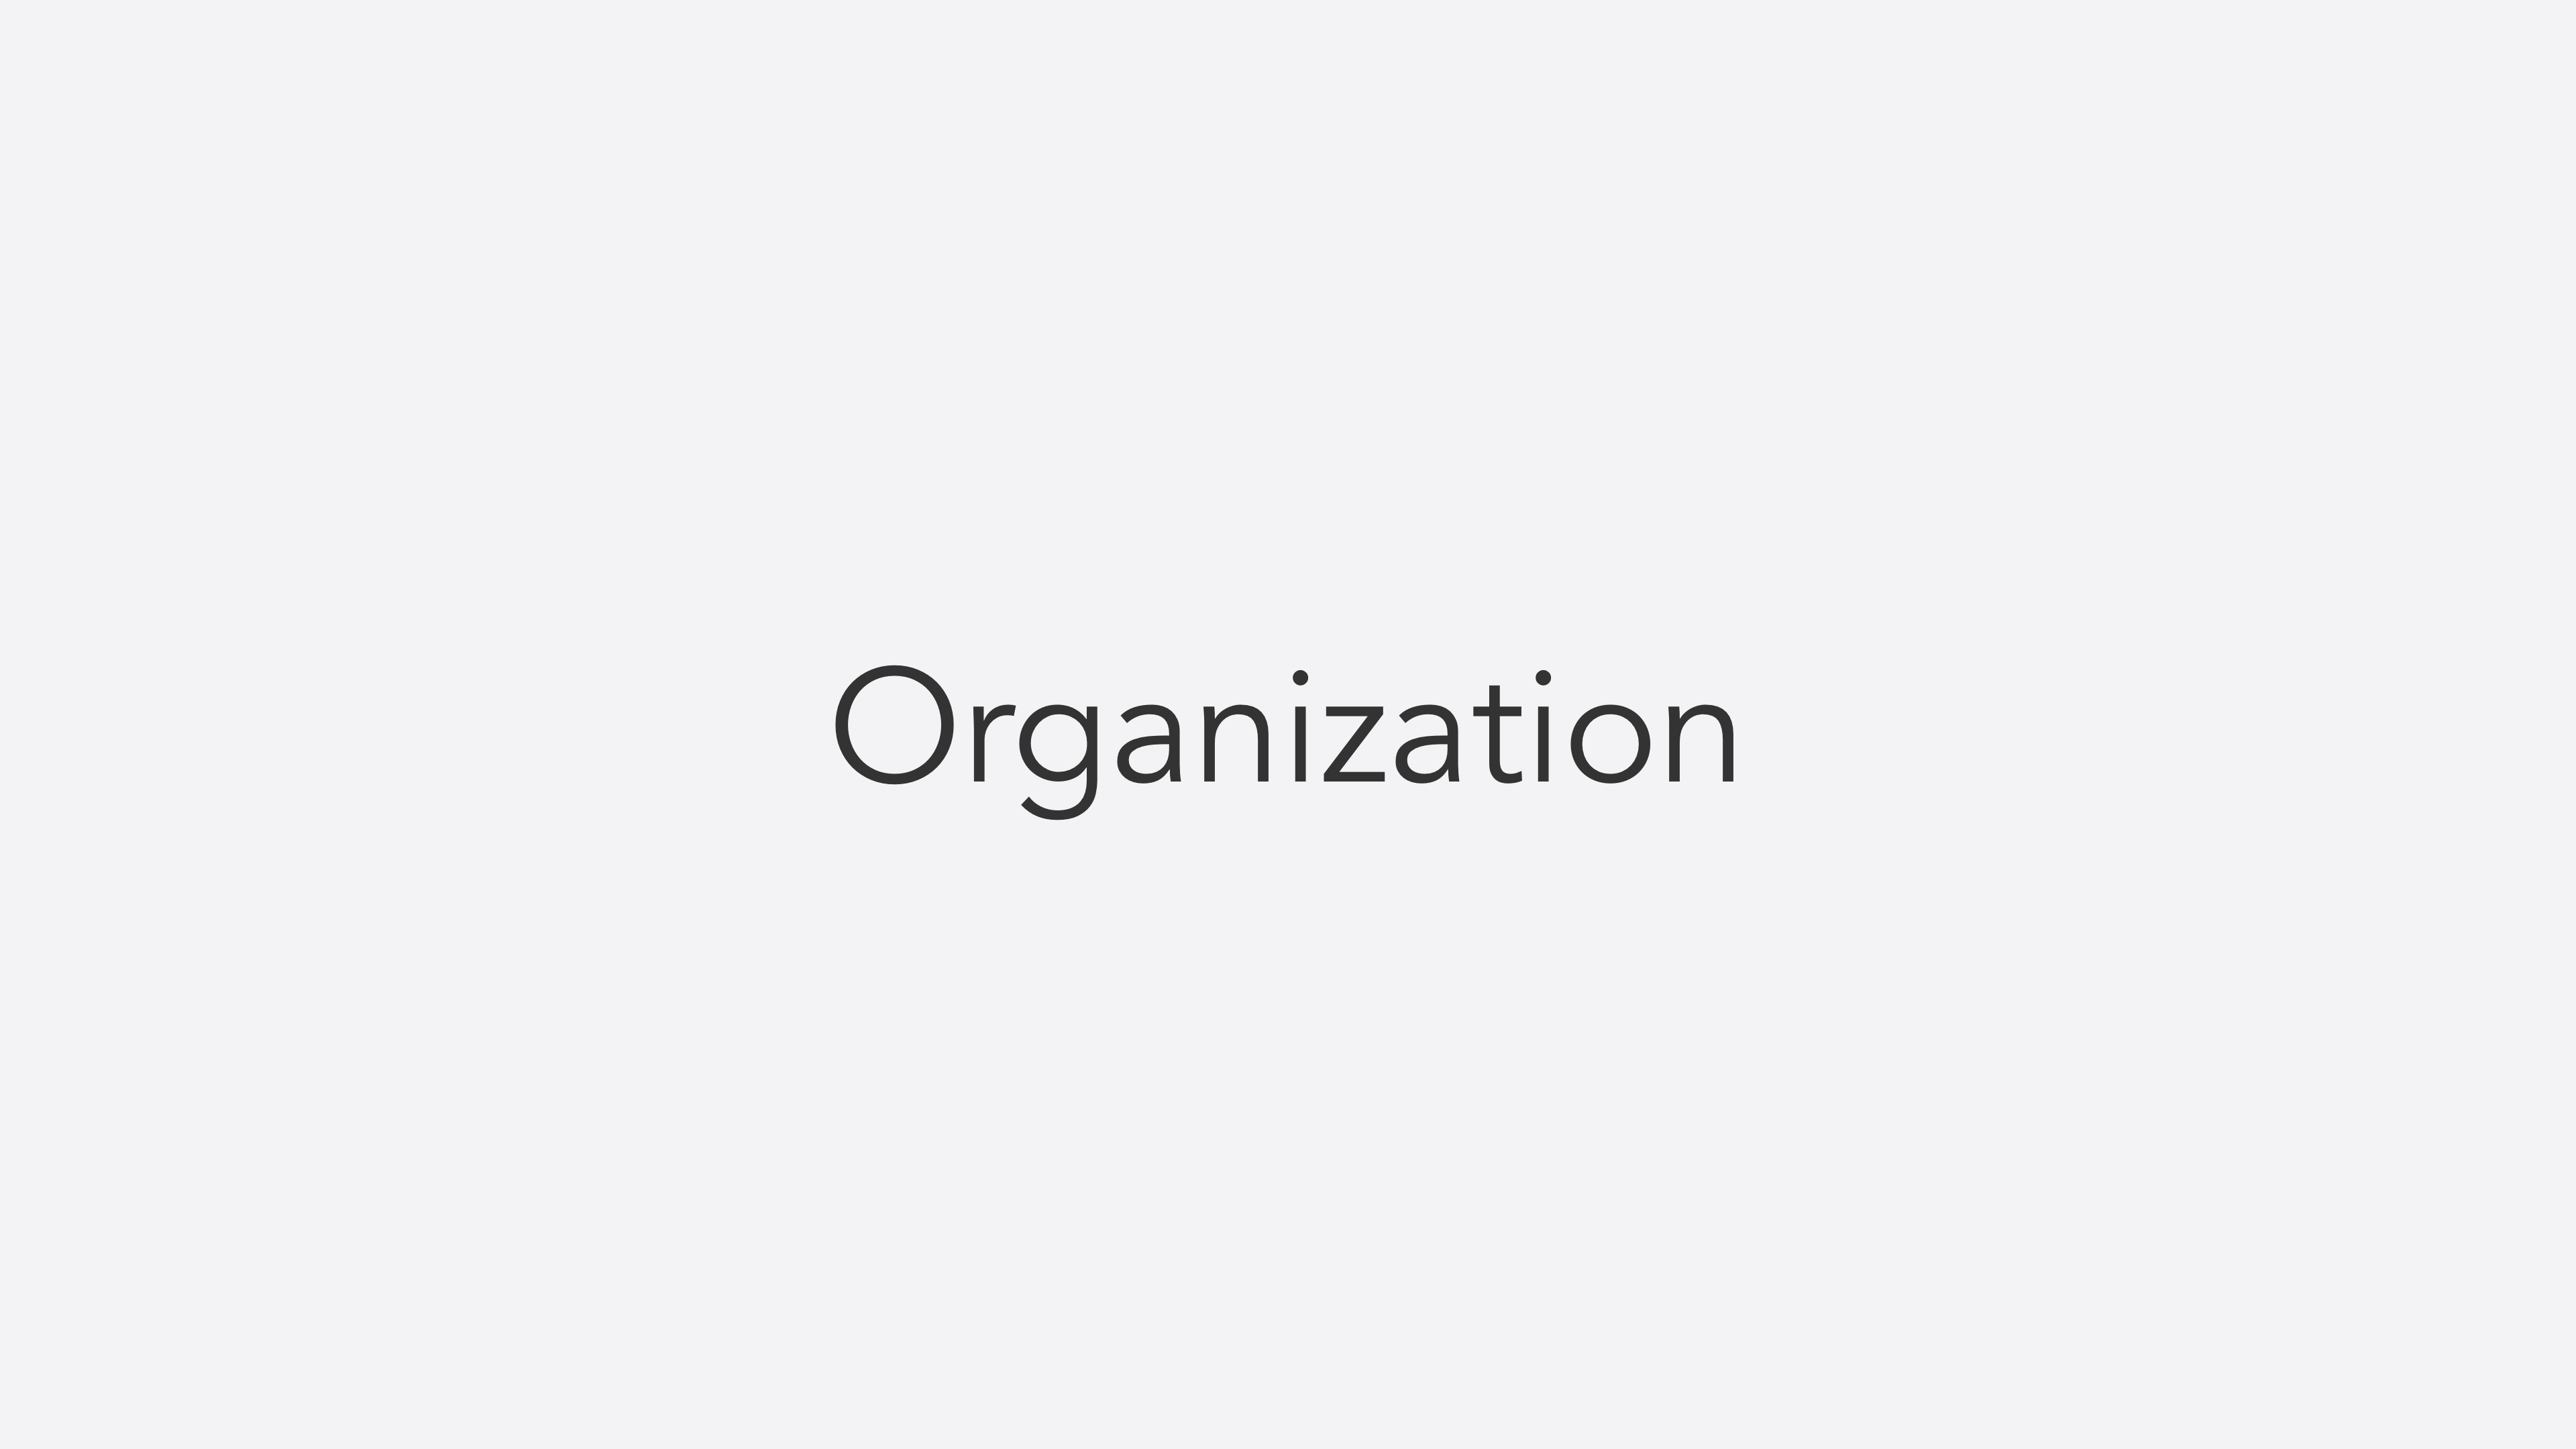 Organization Features